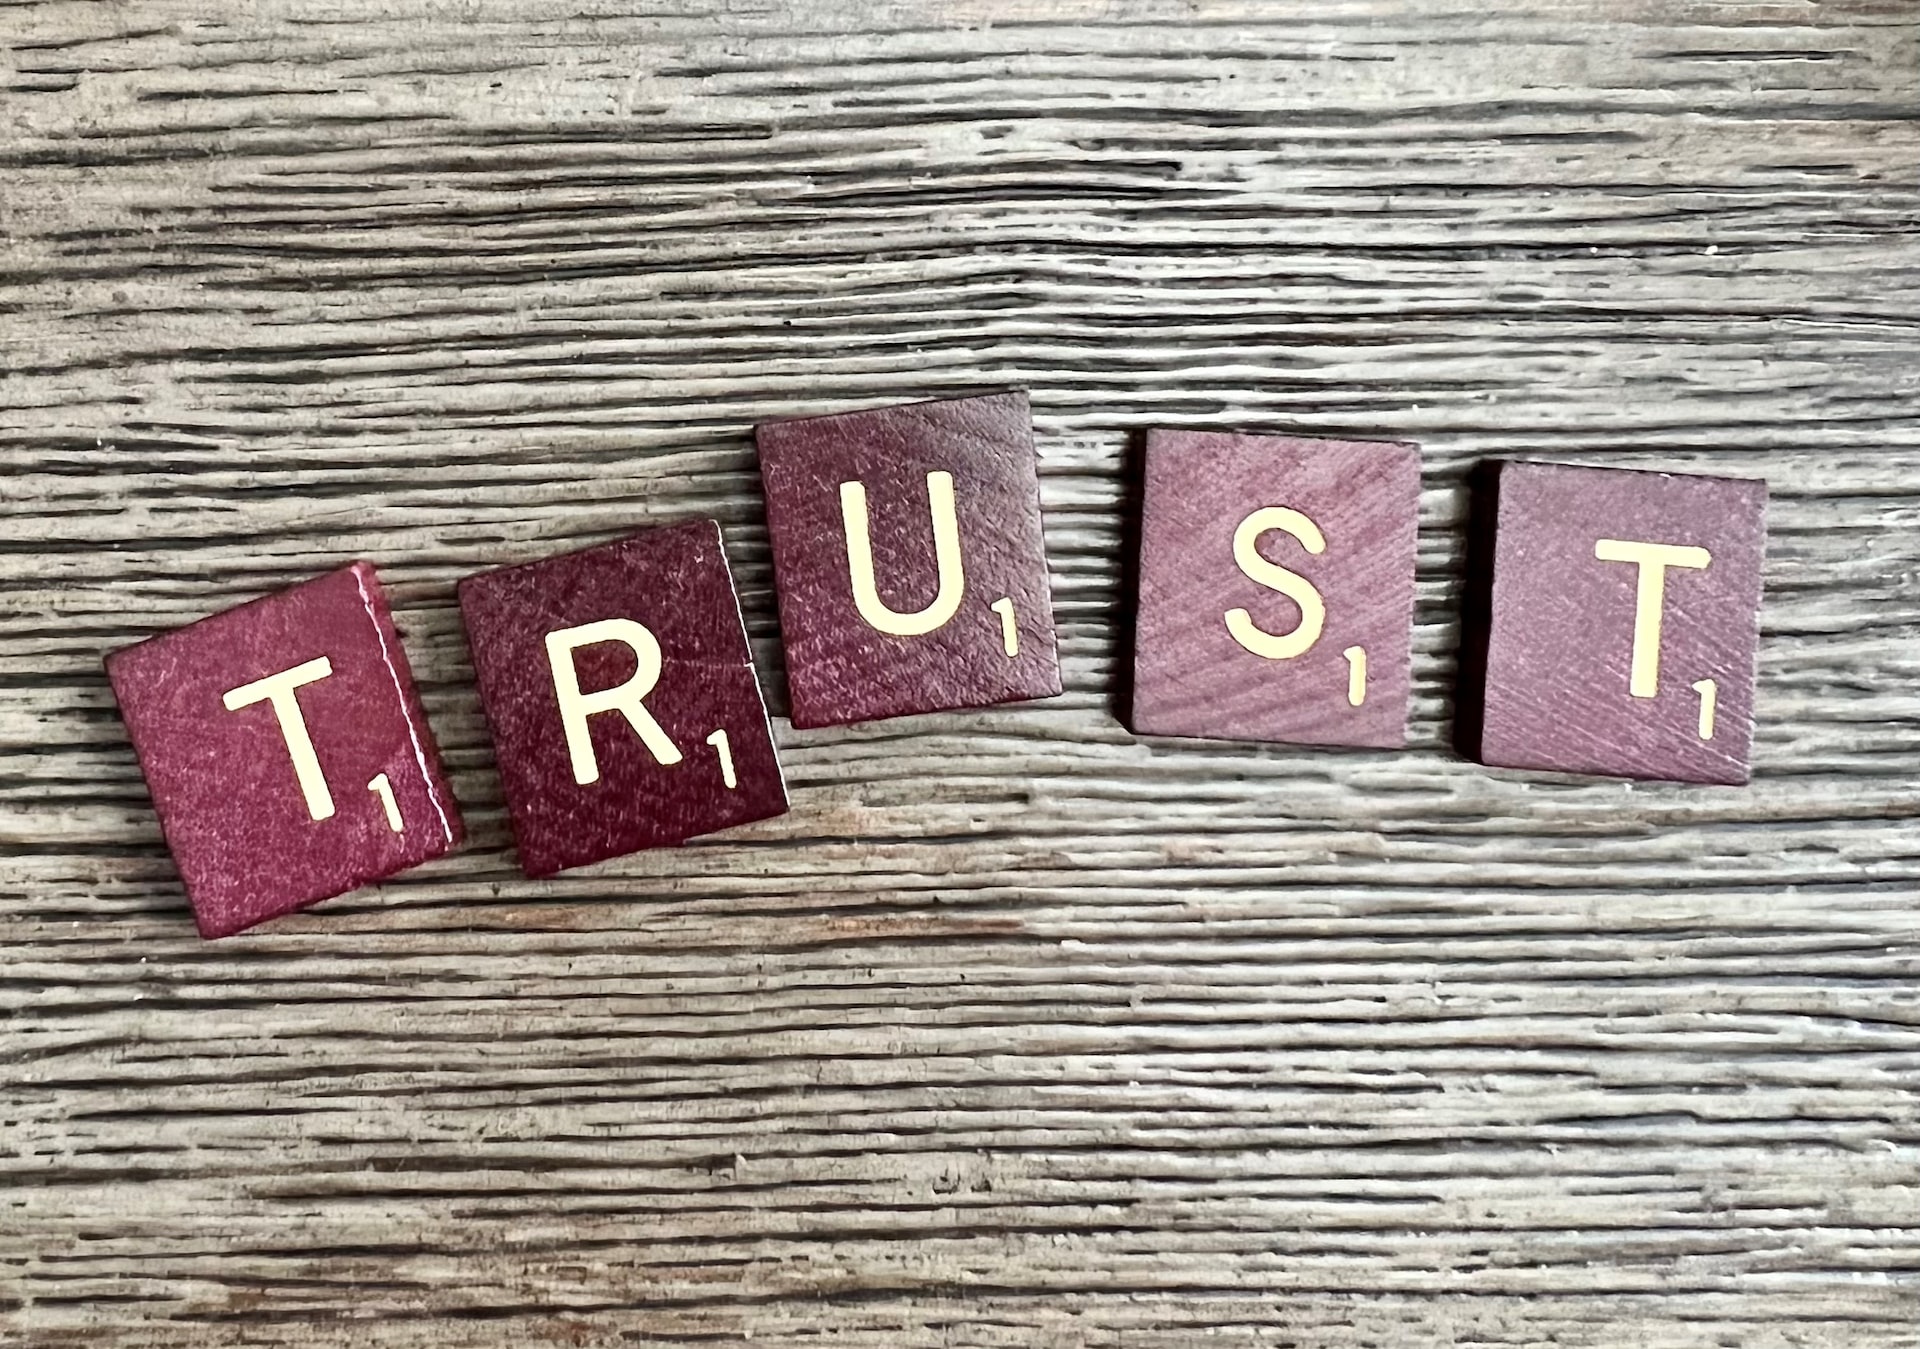 Scrabble tiles spelling 'trust'